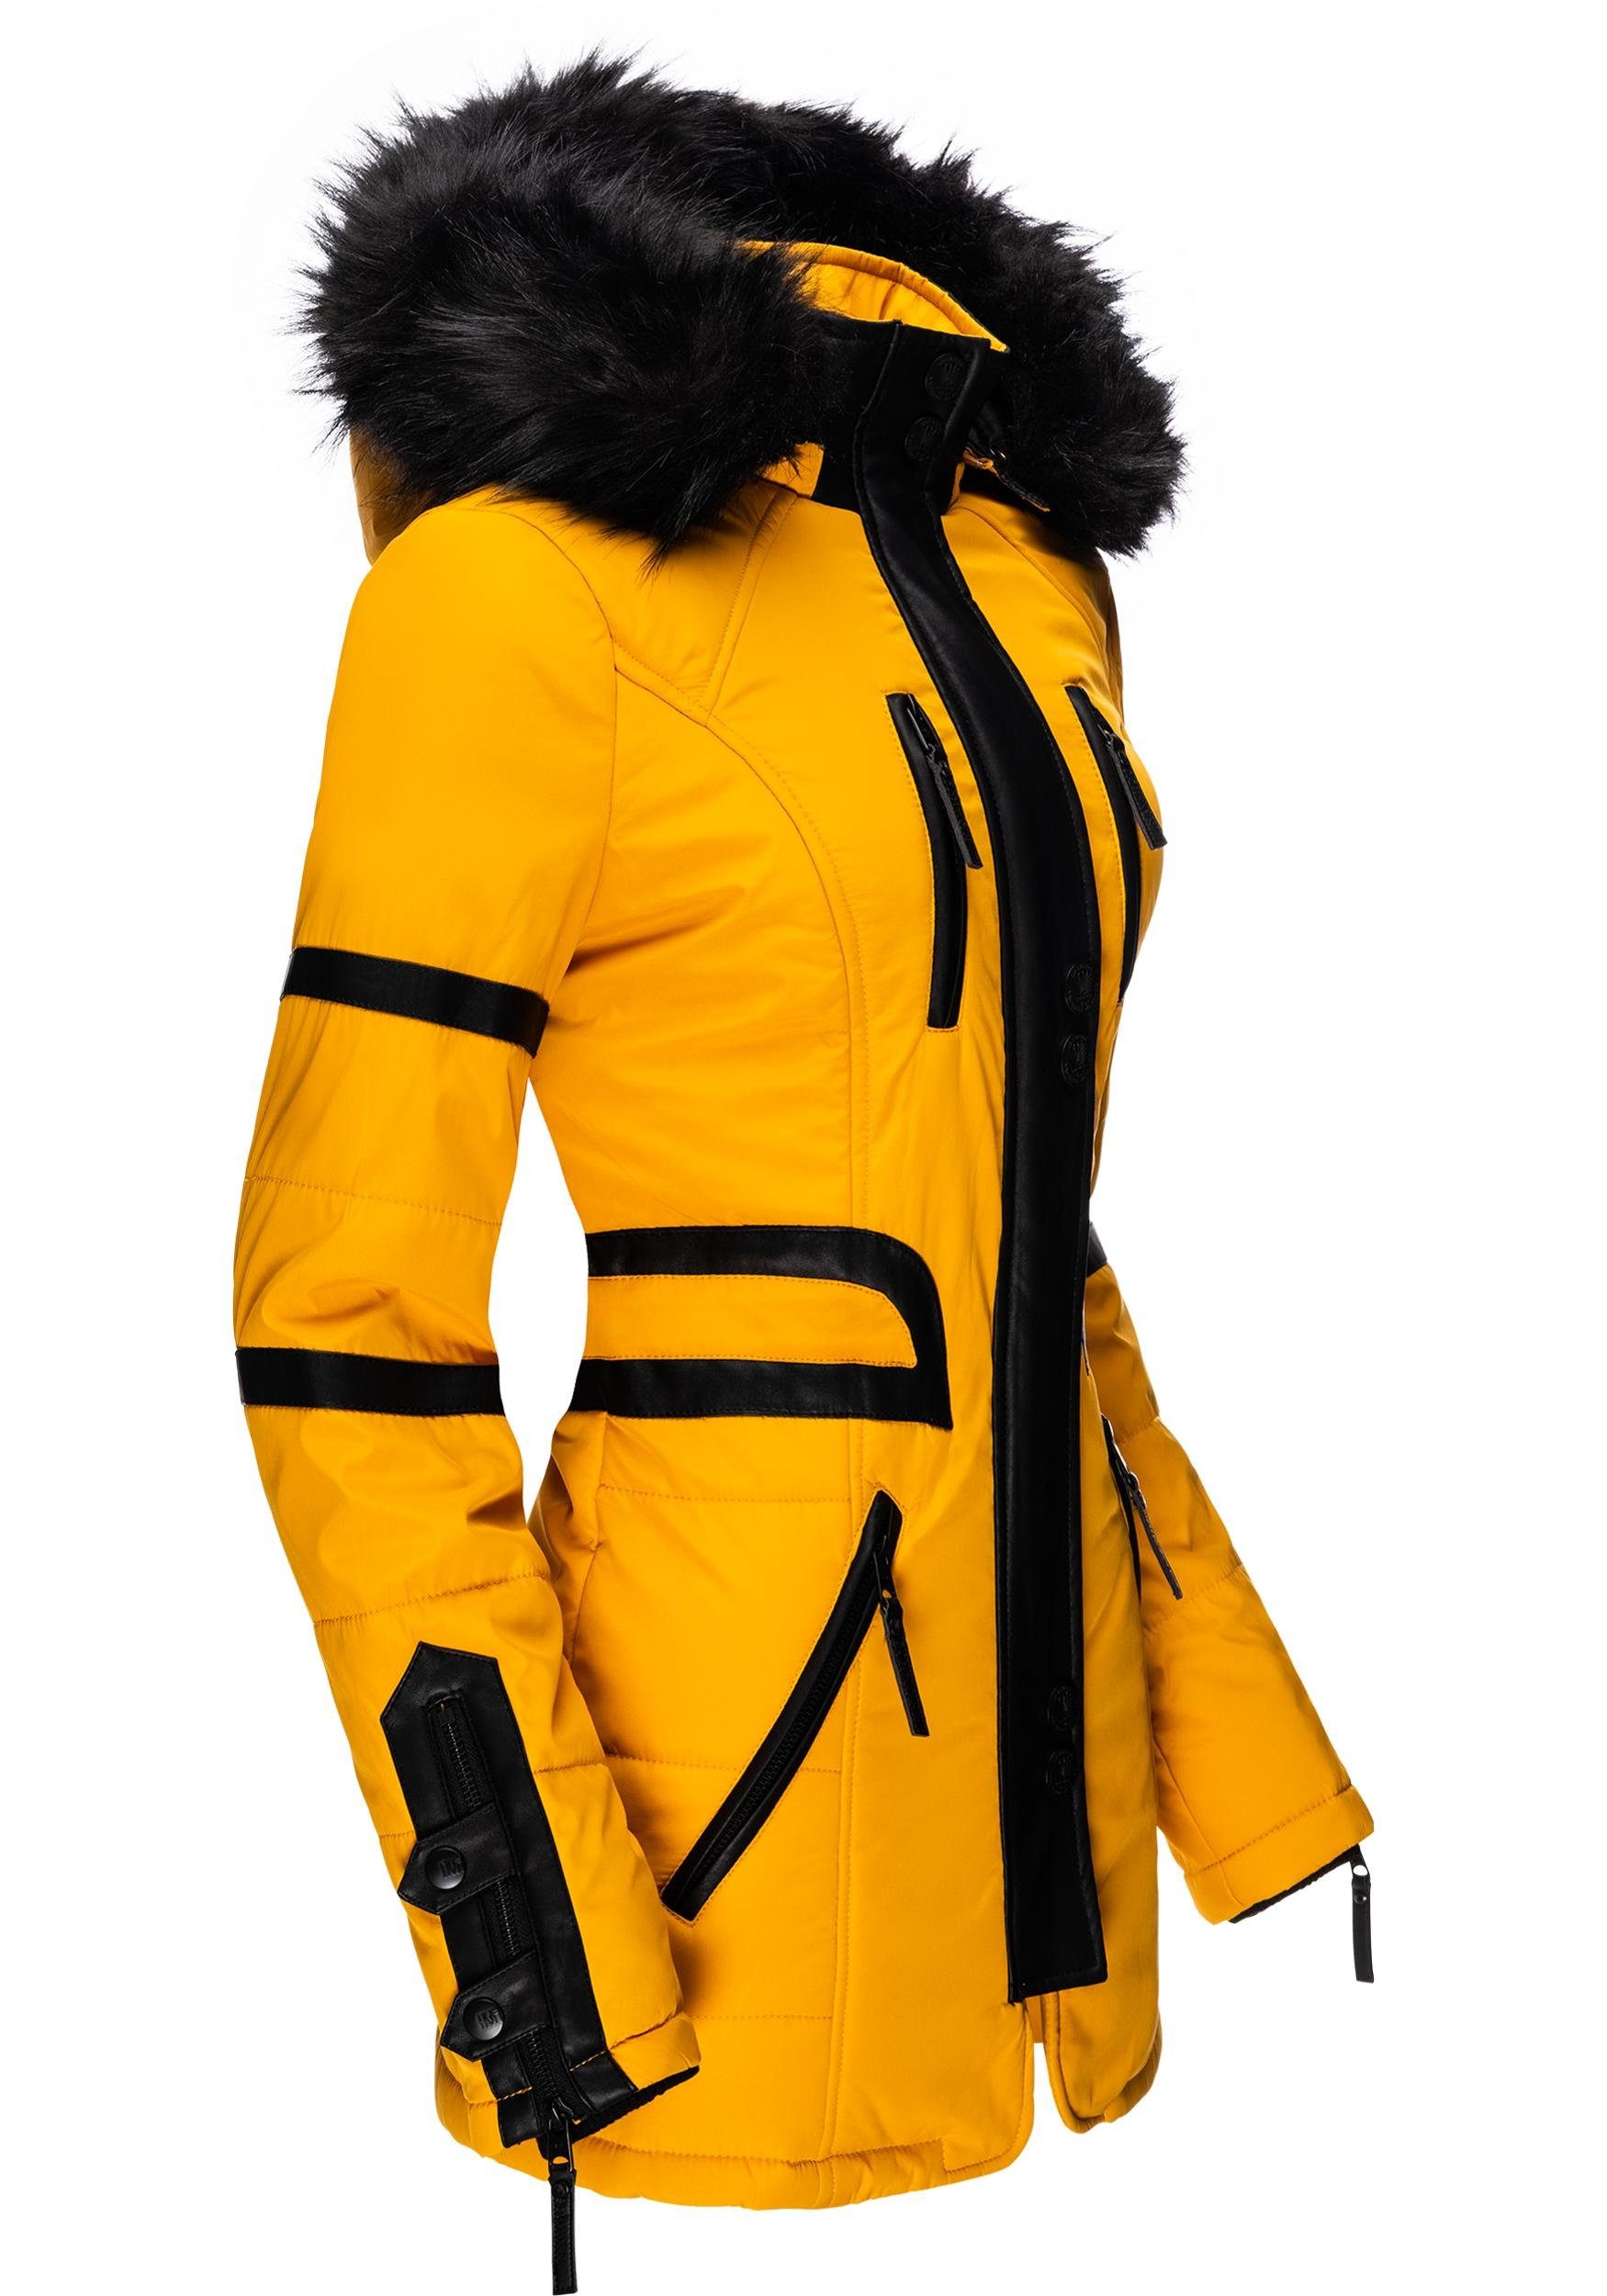 stylish ladies winter jacket with hood yellow